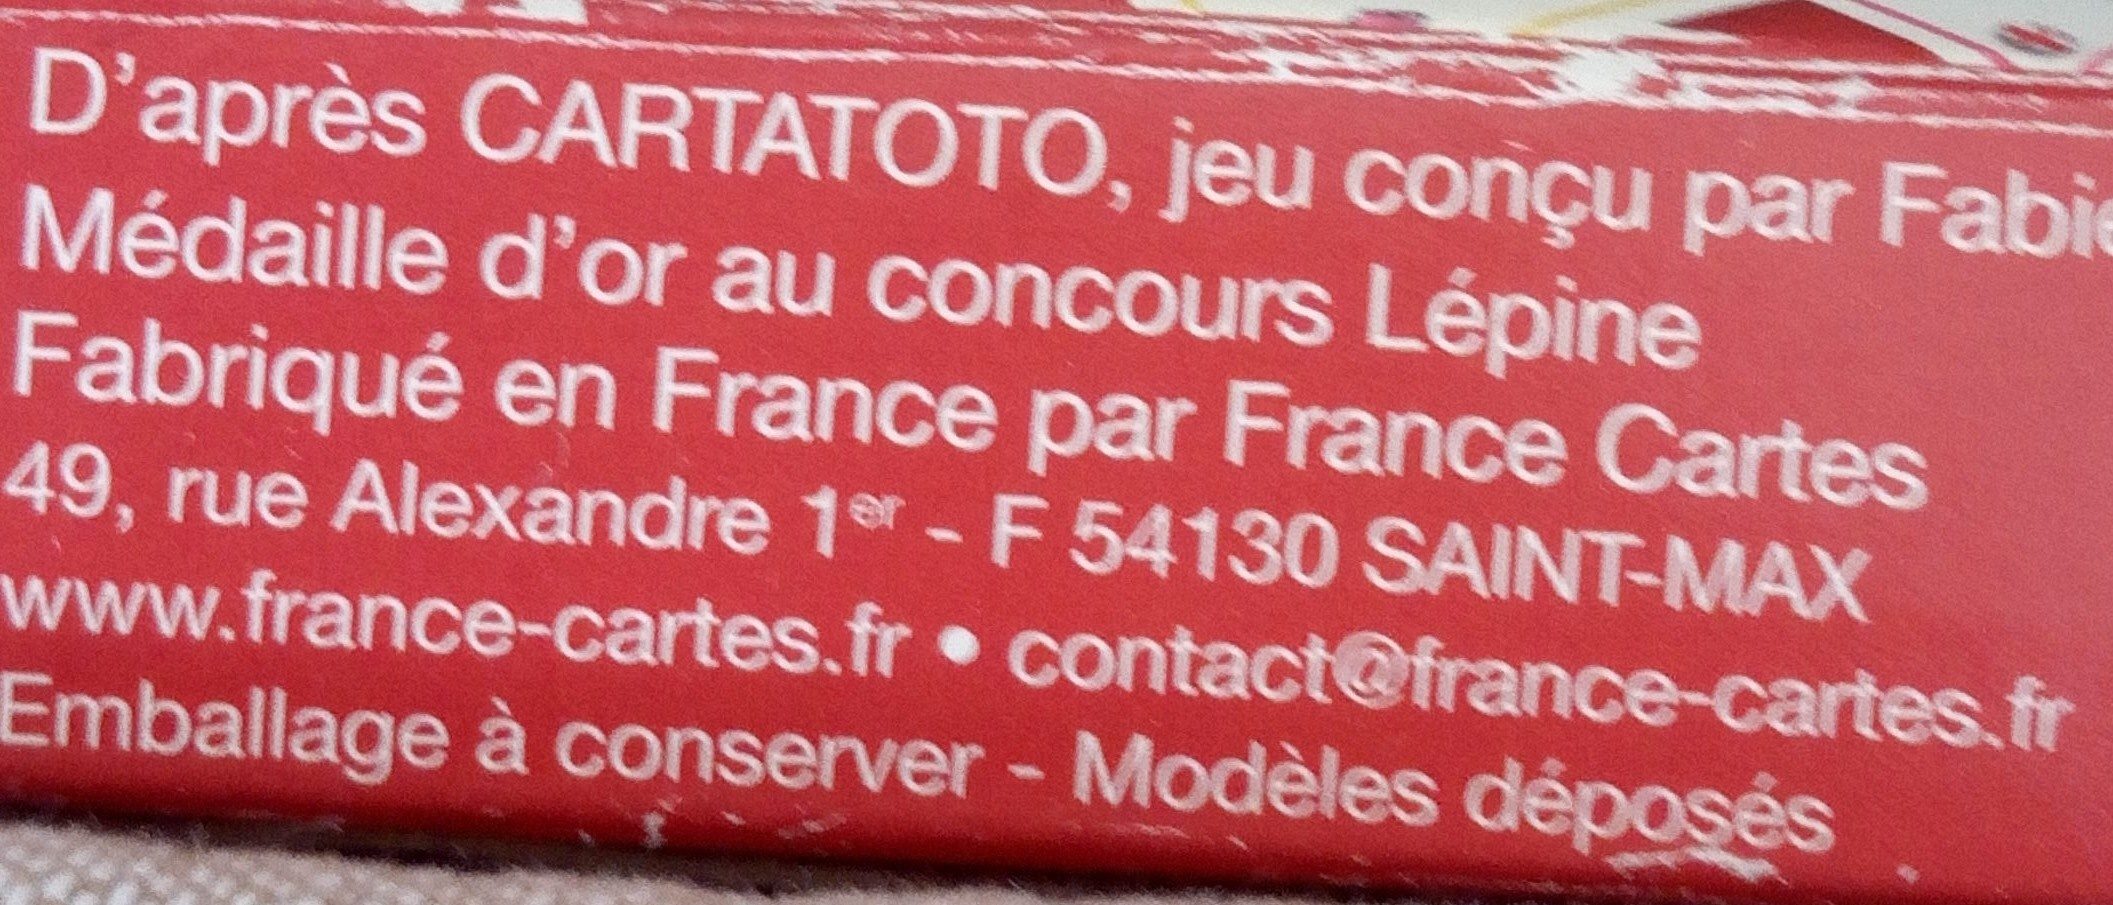 Cartatoto Anglais - Ingredients - fr